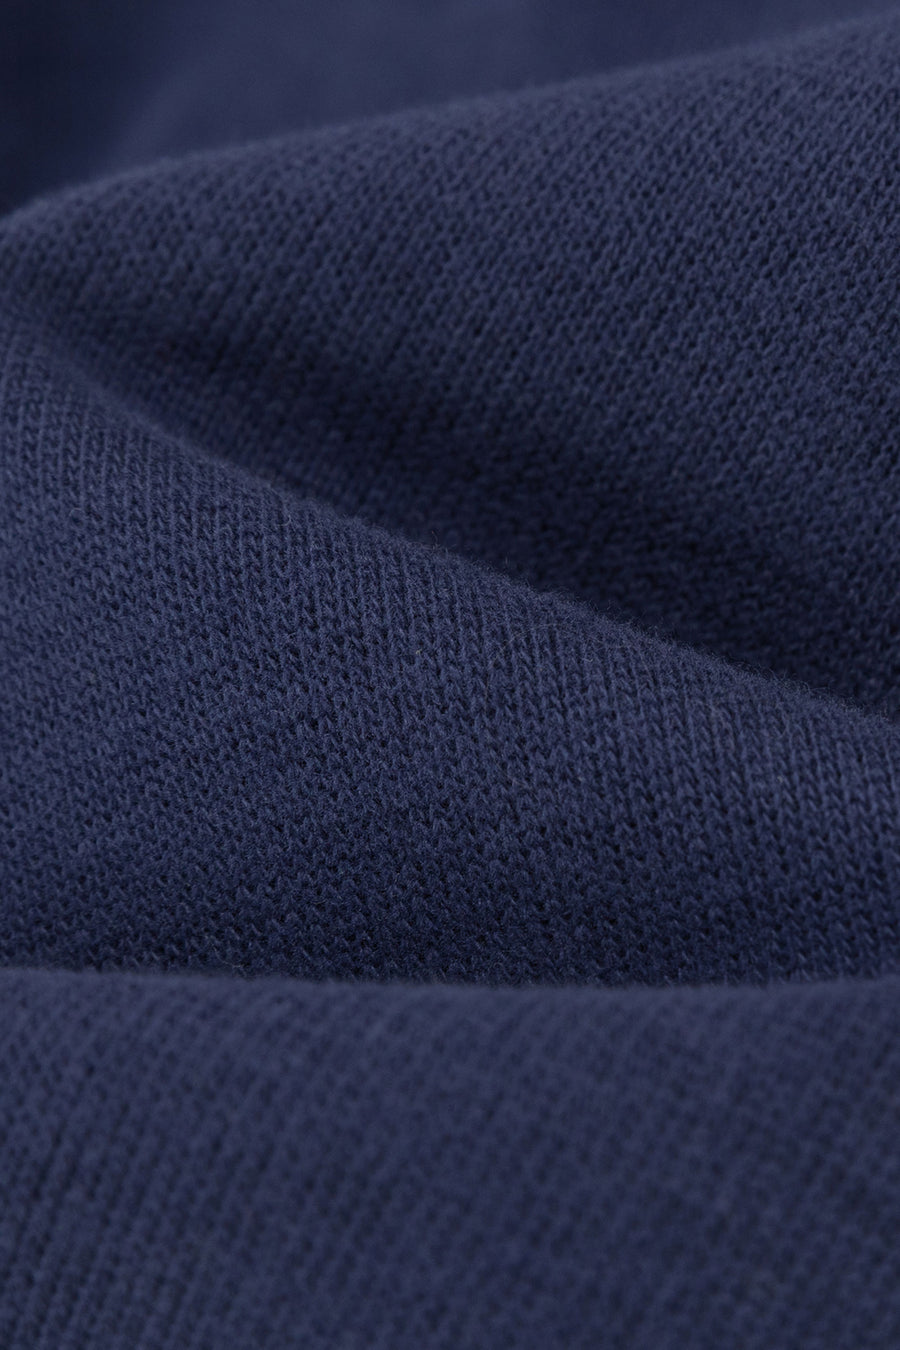 CHUU Printed Color Matching String Sweatshirt